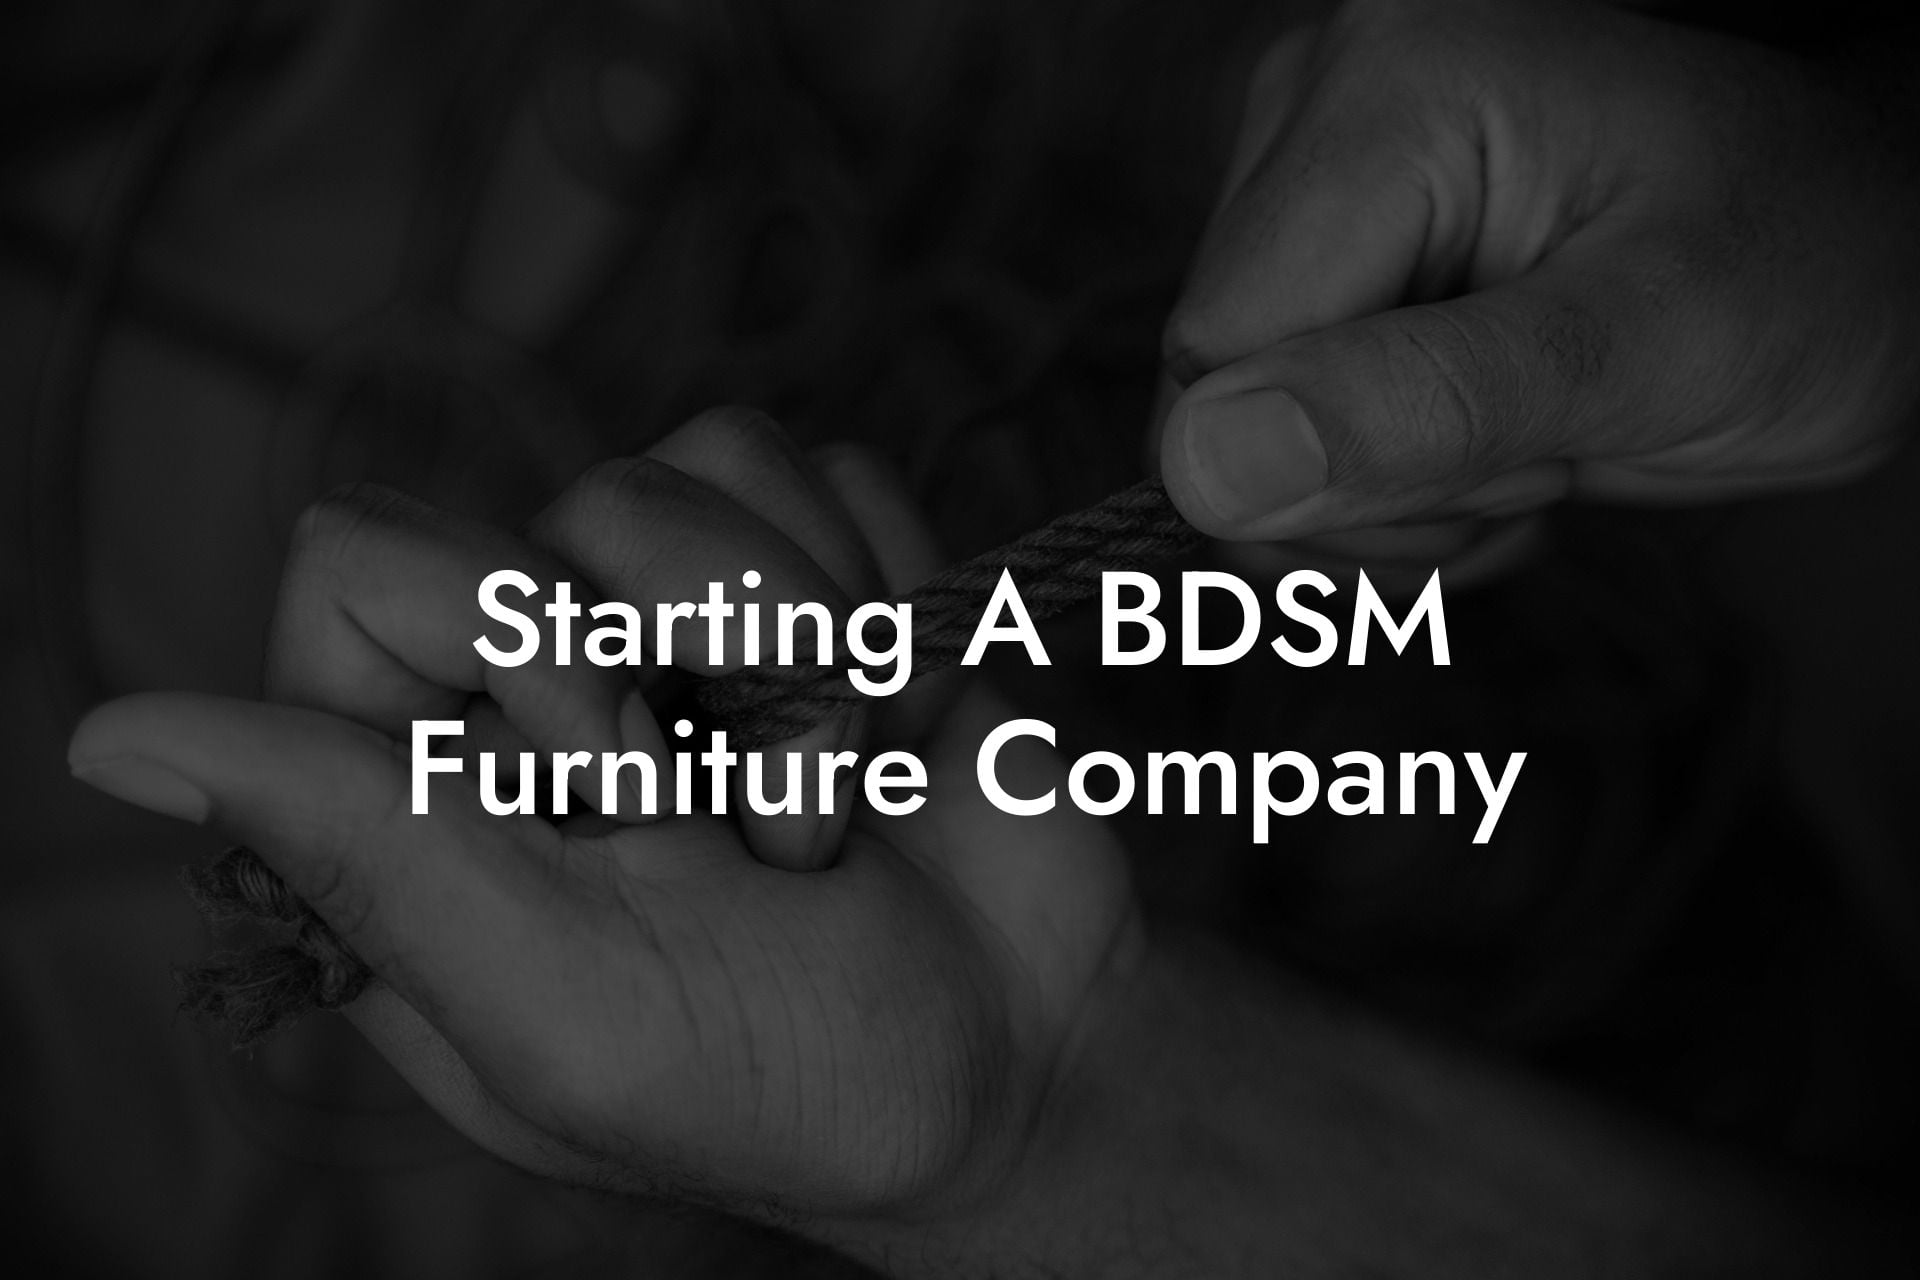 Starting A BDSM Furniture Company